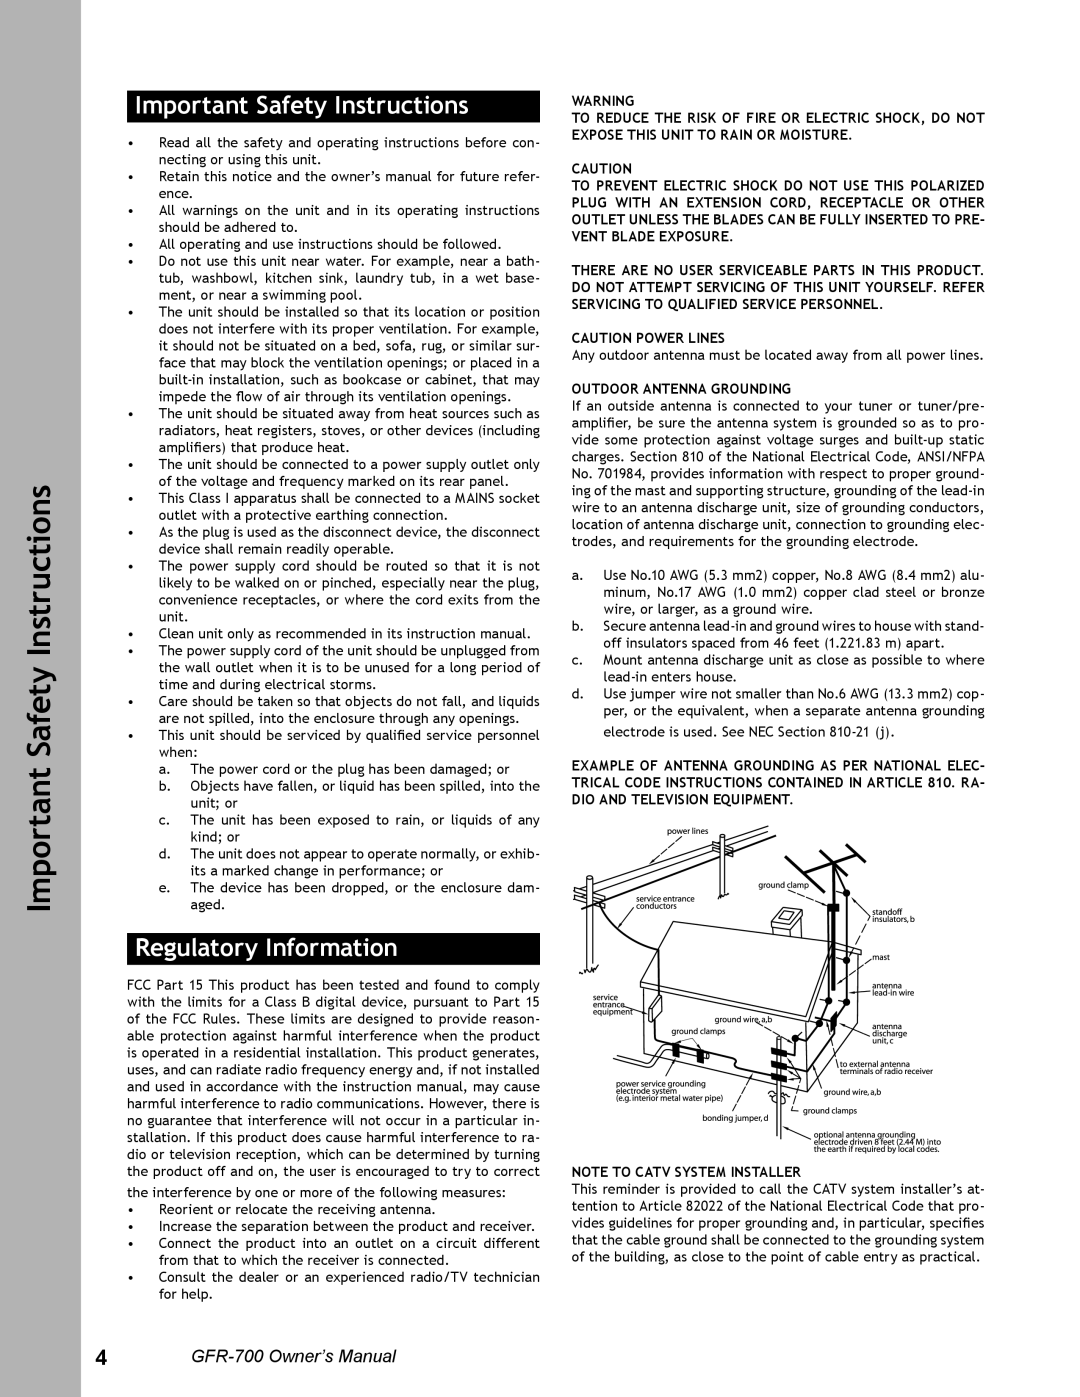 Adcom GFR-700 user manual Important Safety Instructions, Regulatory Information 